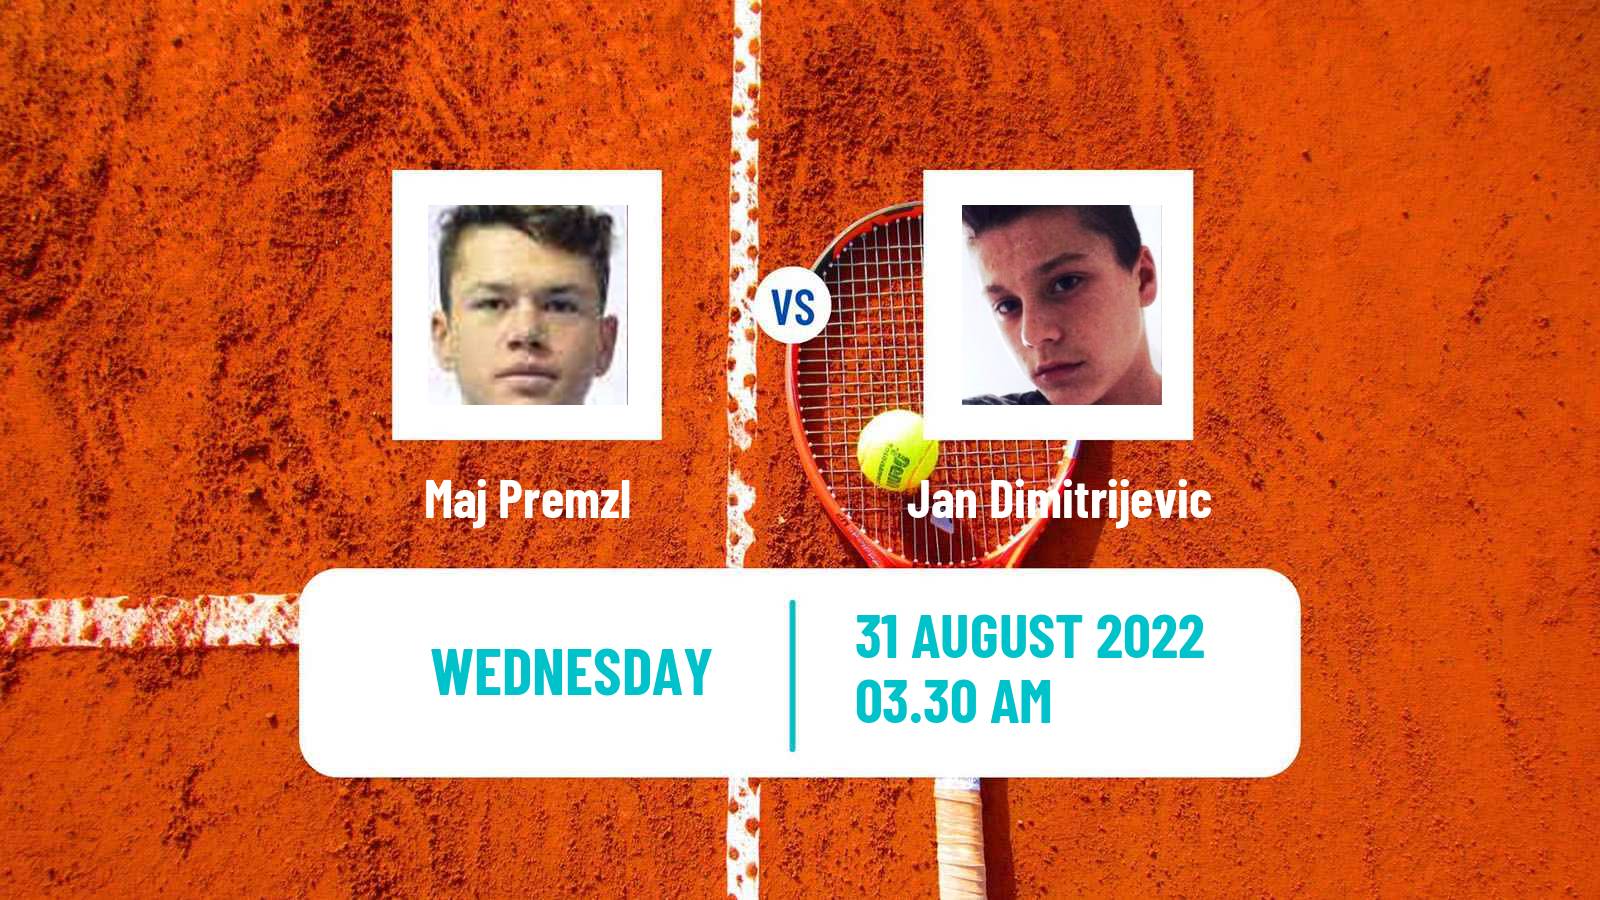 Tennis ITF Tournaments Maj Premzl - Jan Dimitrijevic